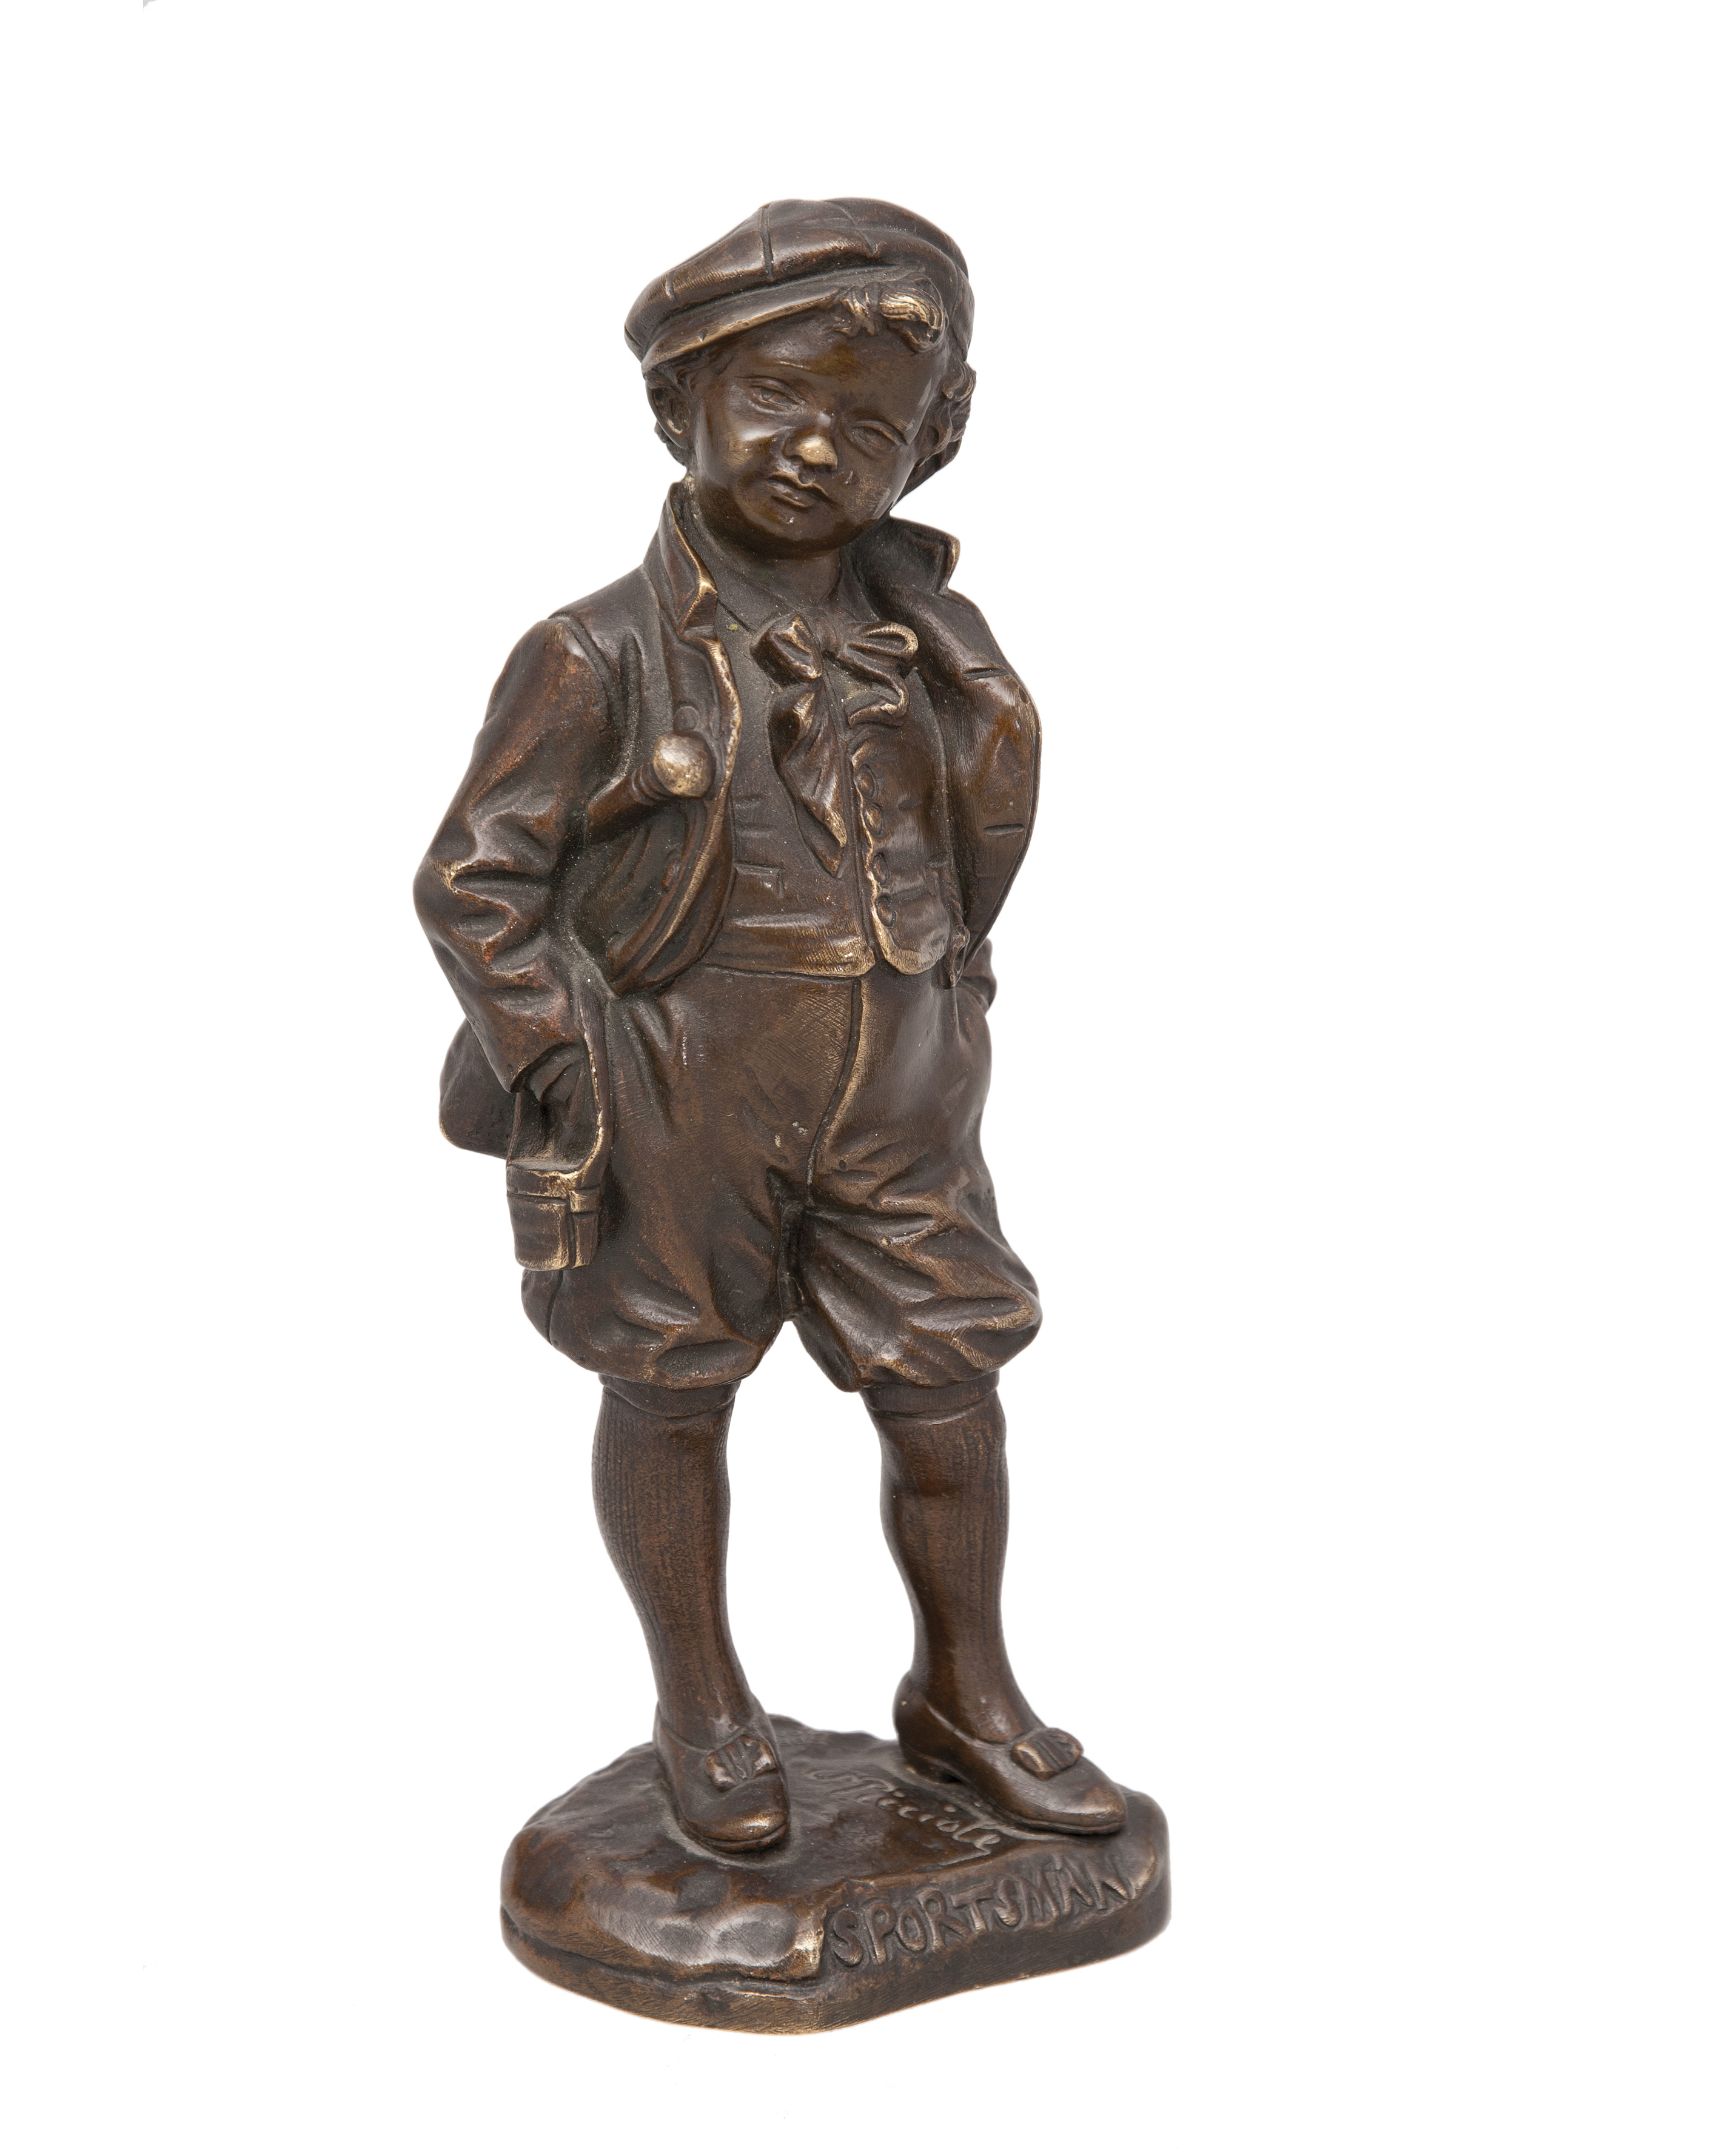 A small bronze figure 'Sportsman'